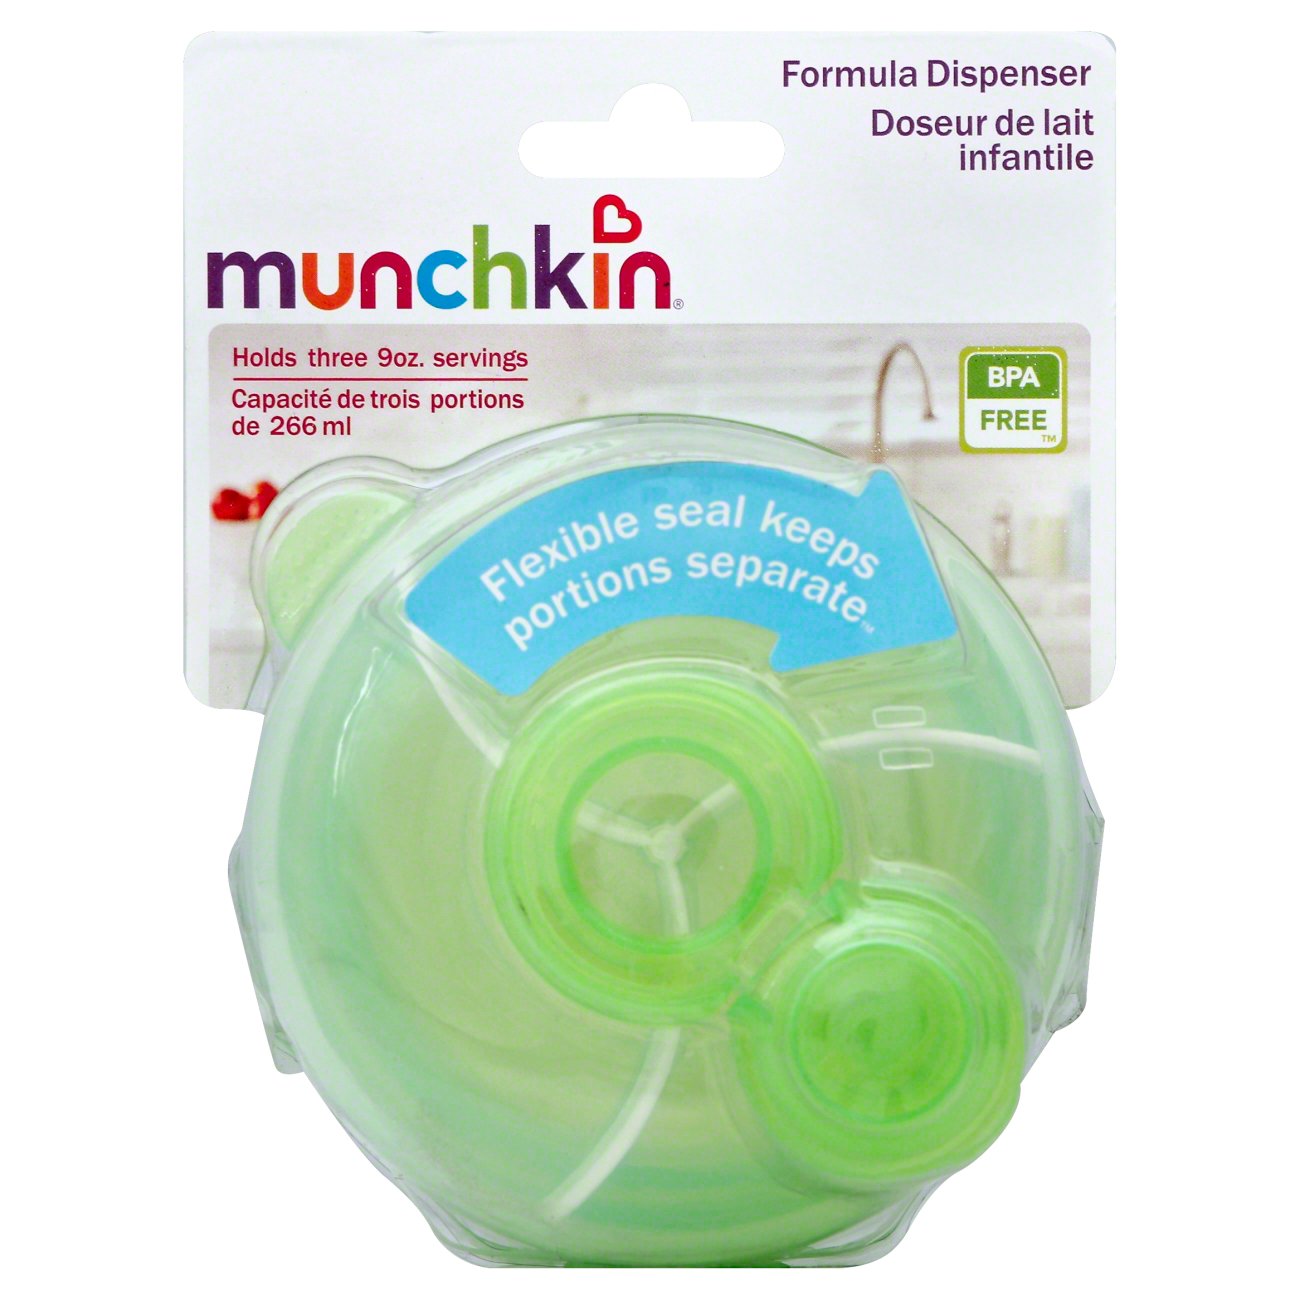 munchkin formula dispenser